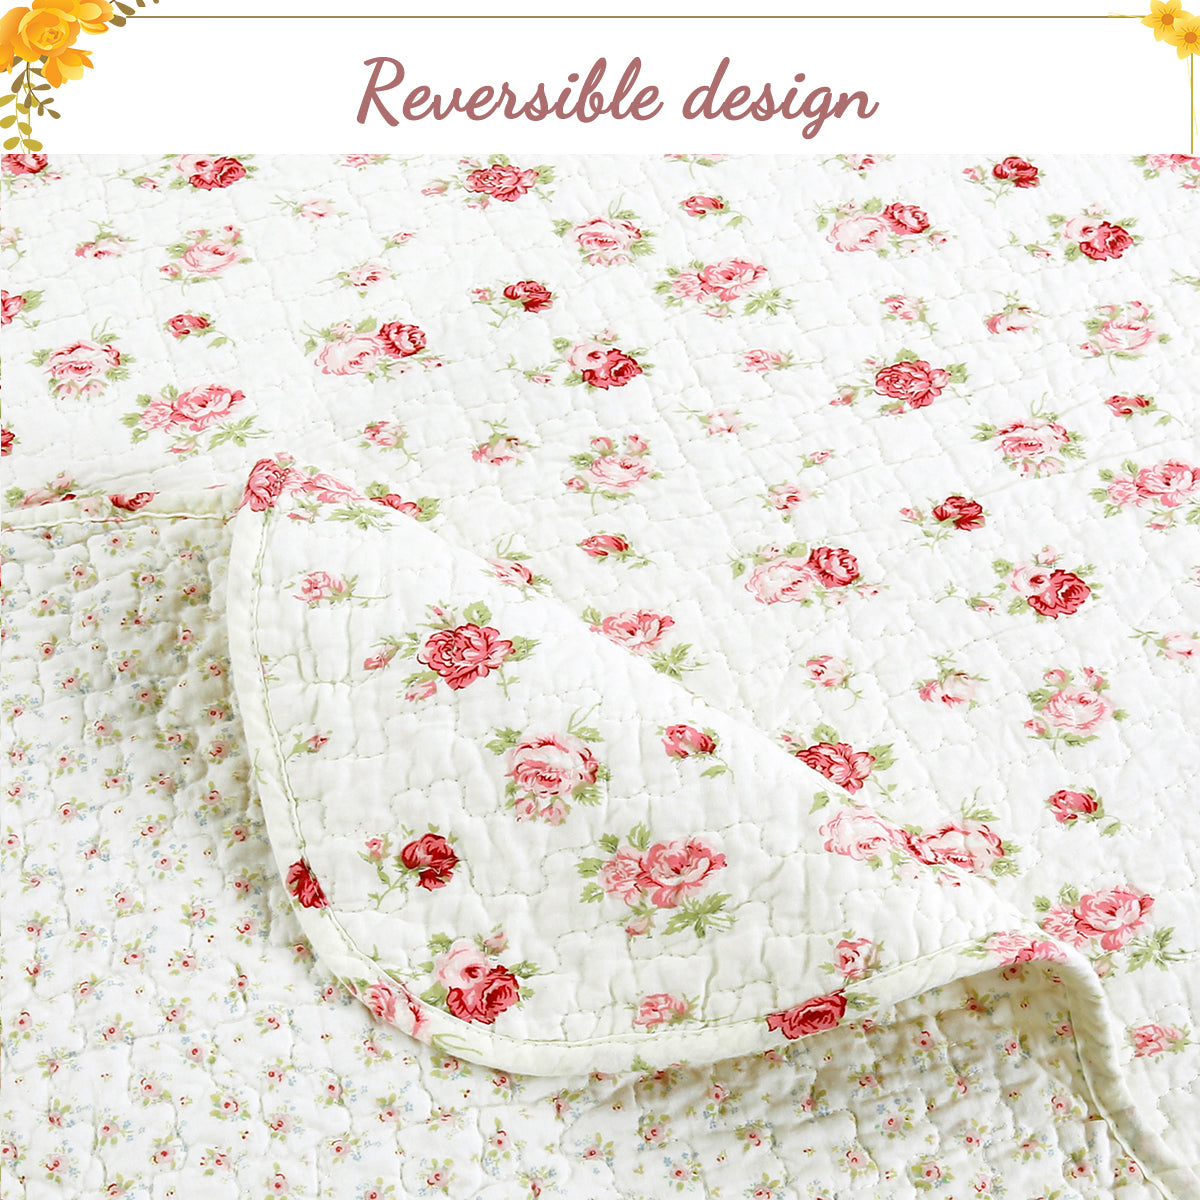 Pink Rose Garden Floral Cotton 3-piece Reversible Quilt Bedding Set